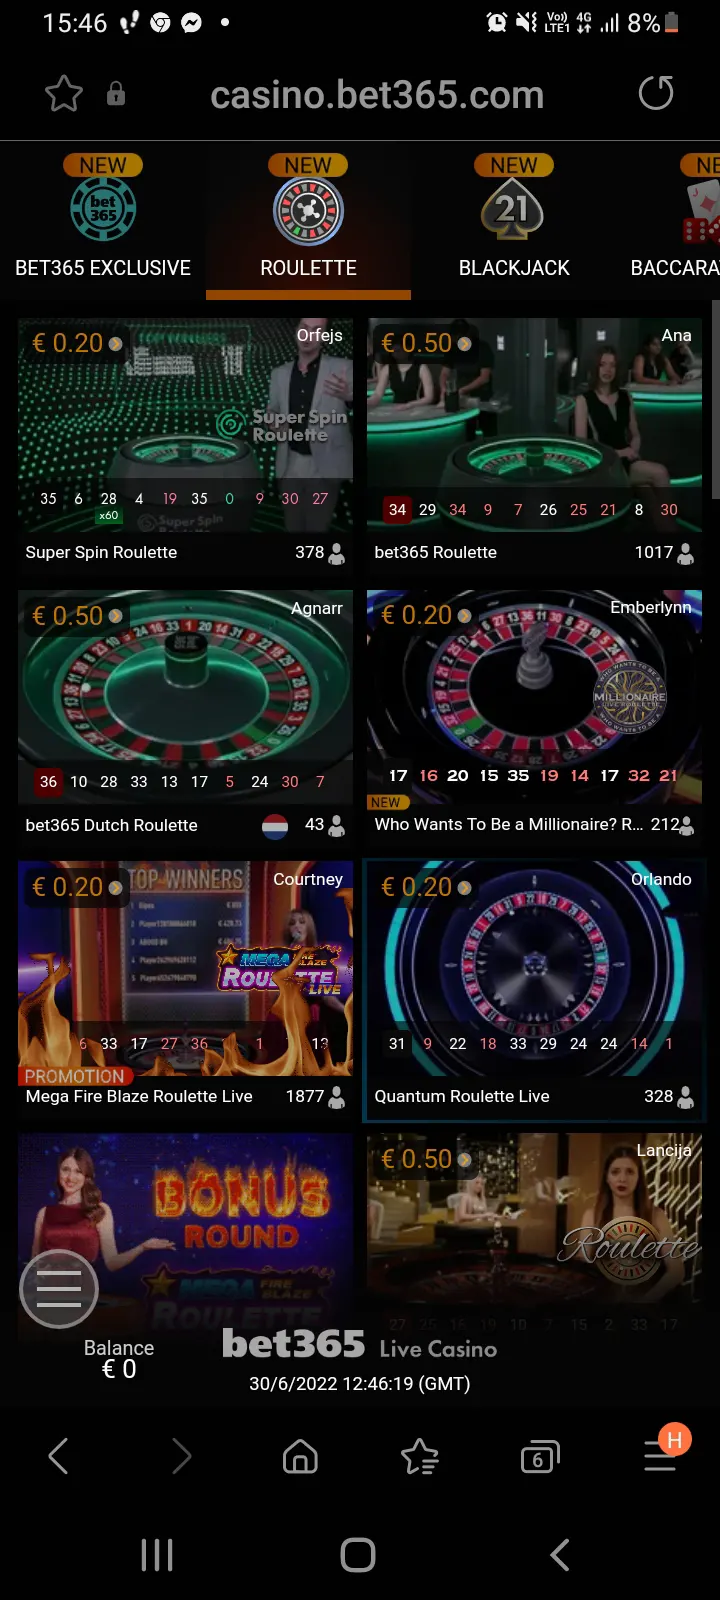 bet365 casino app screenshot 7